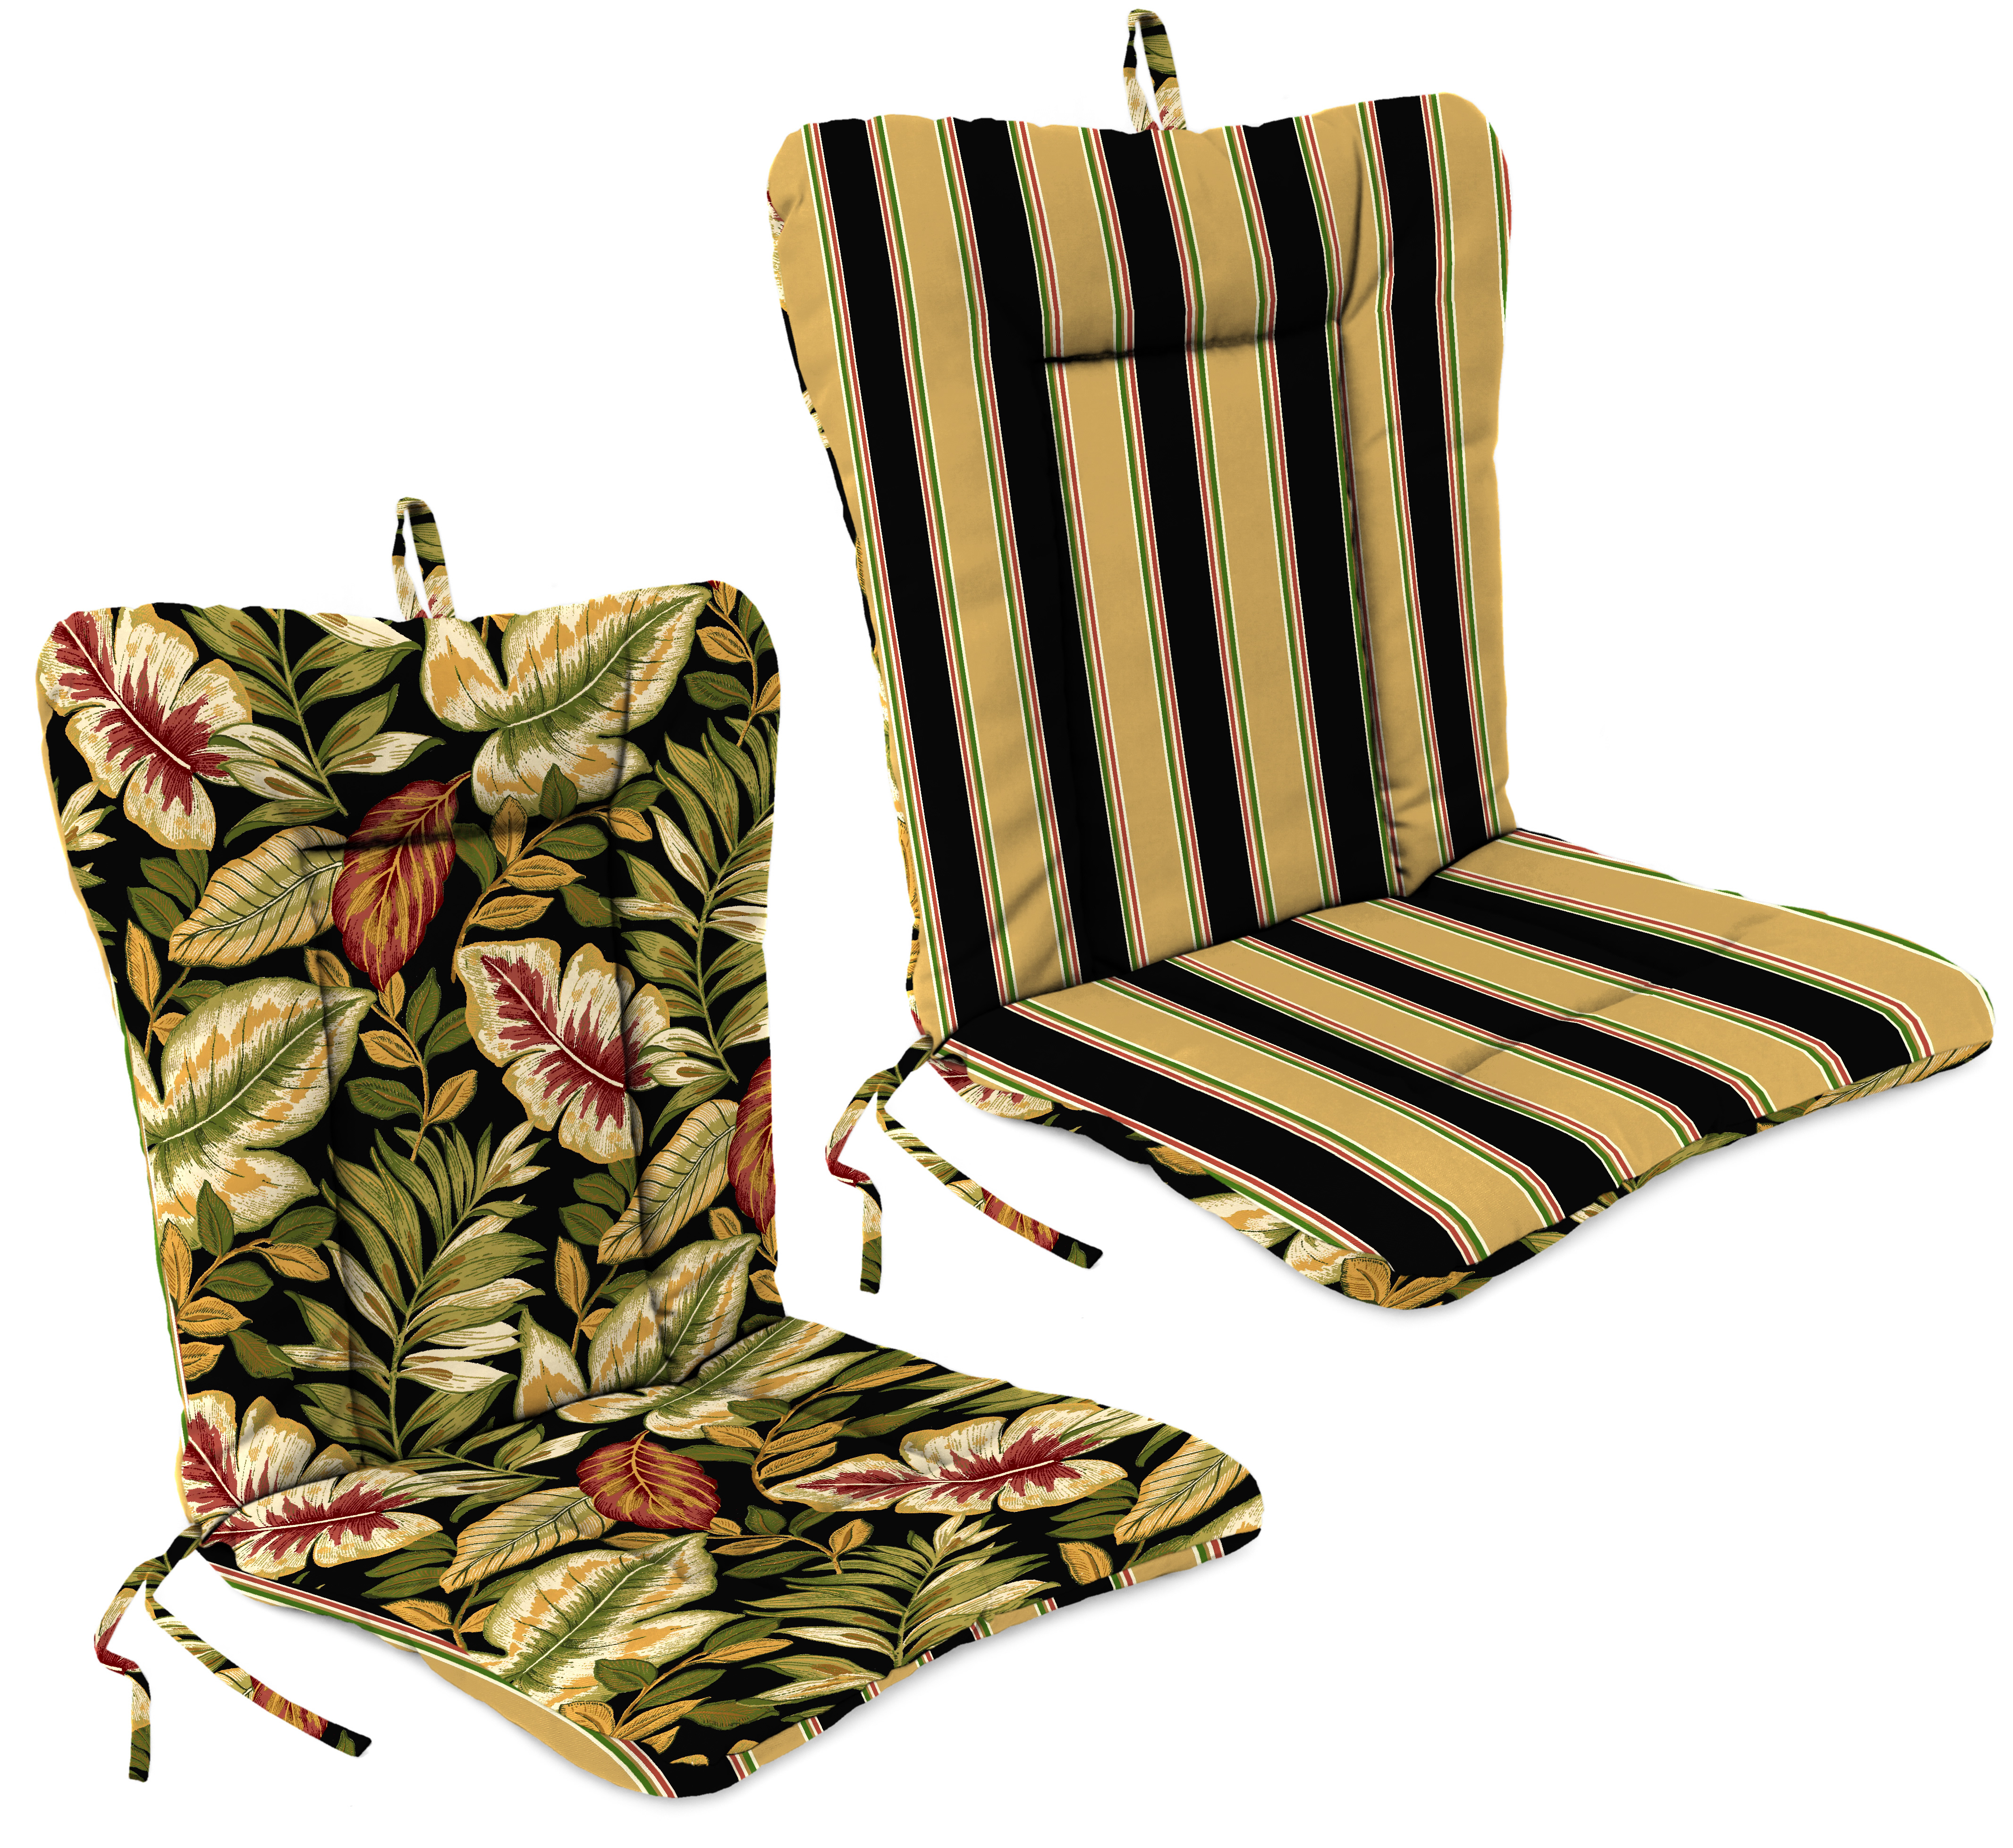 Dinalounge Patio Chair Cushion in Coach Stripe Black/Twilight Leaves Black